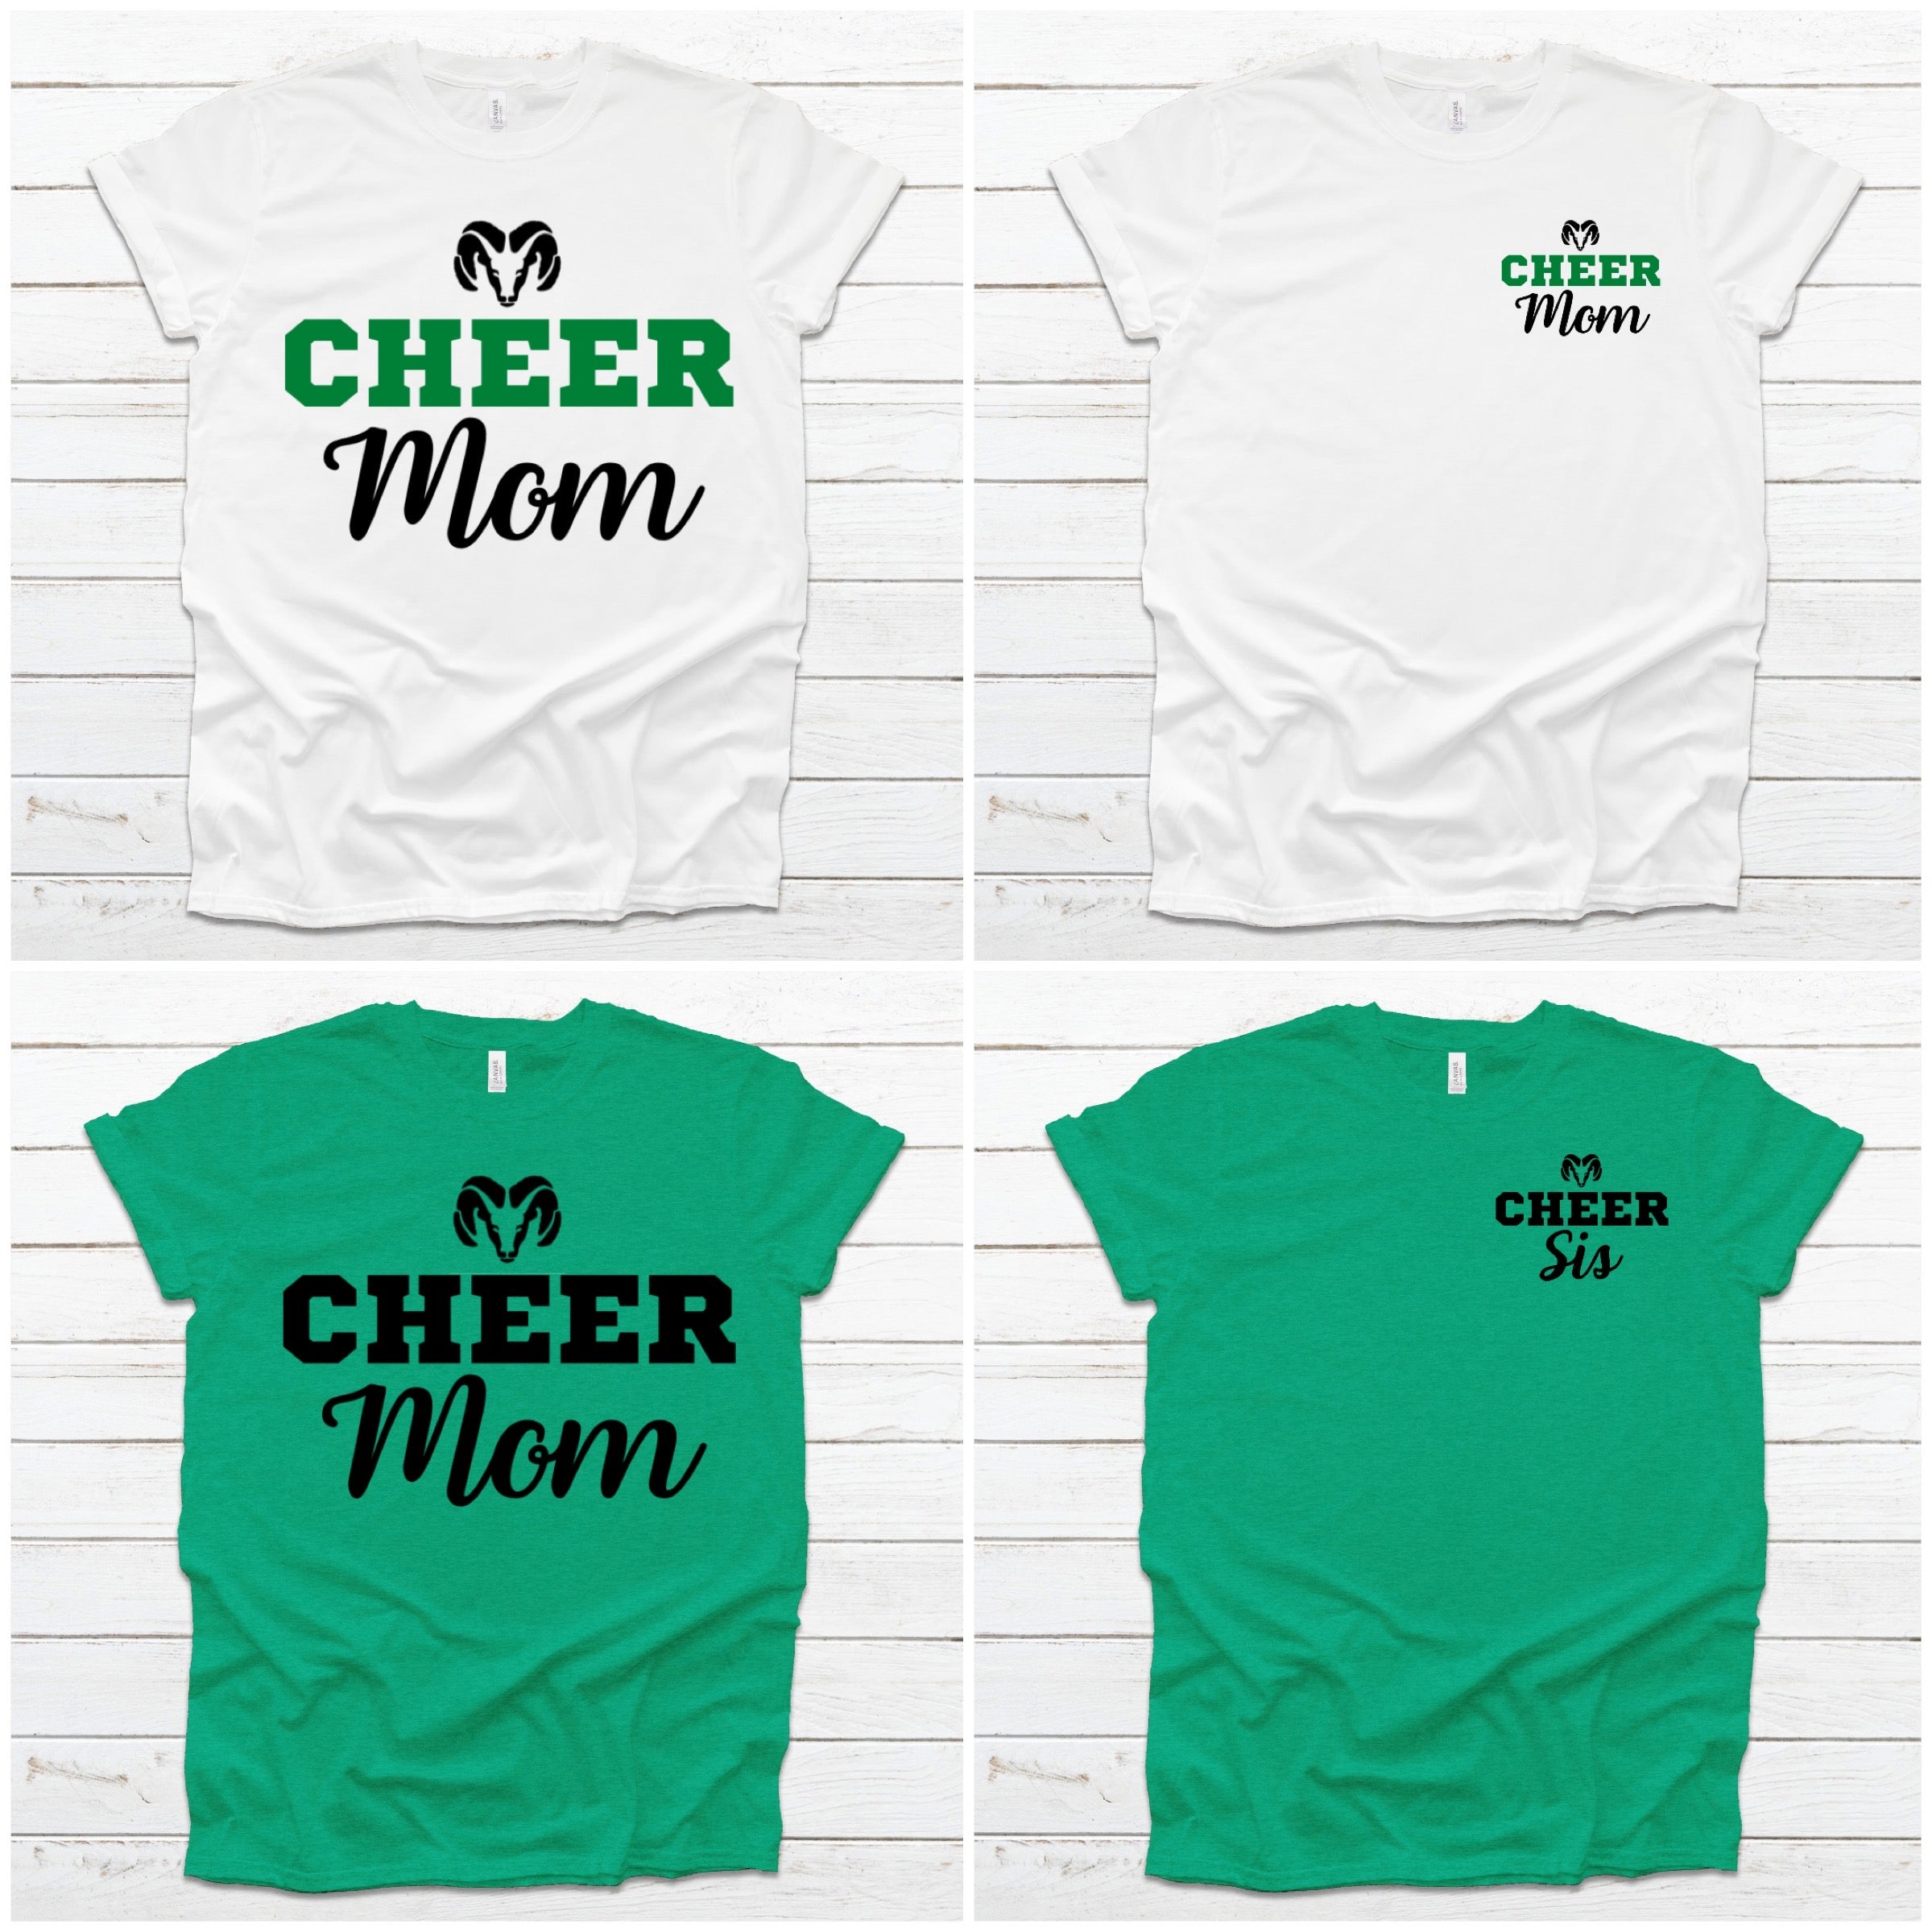 Cheer Mom (Adult)